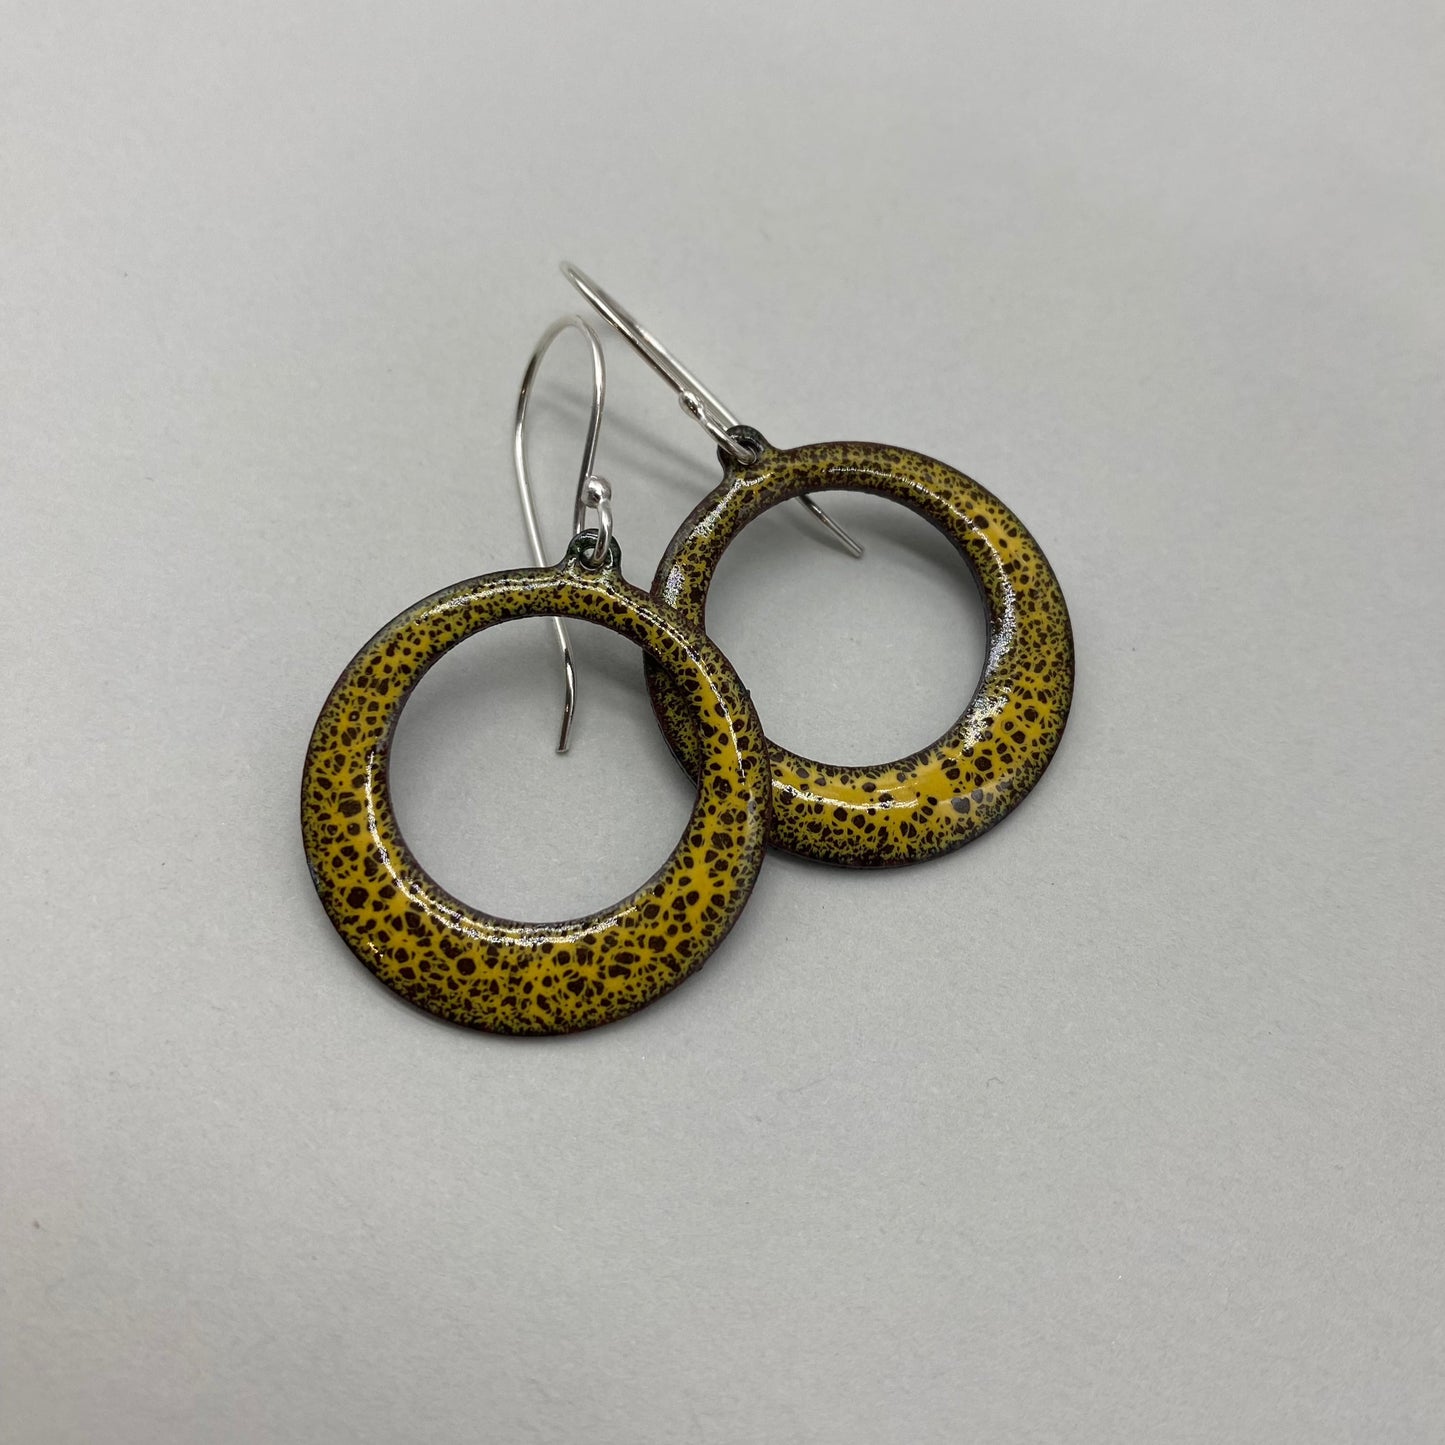 Round open circle earrings in yellow enamel - MaisyPlum